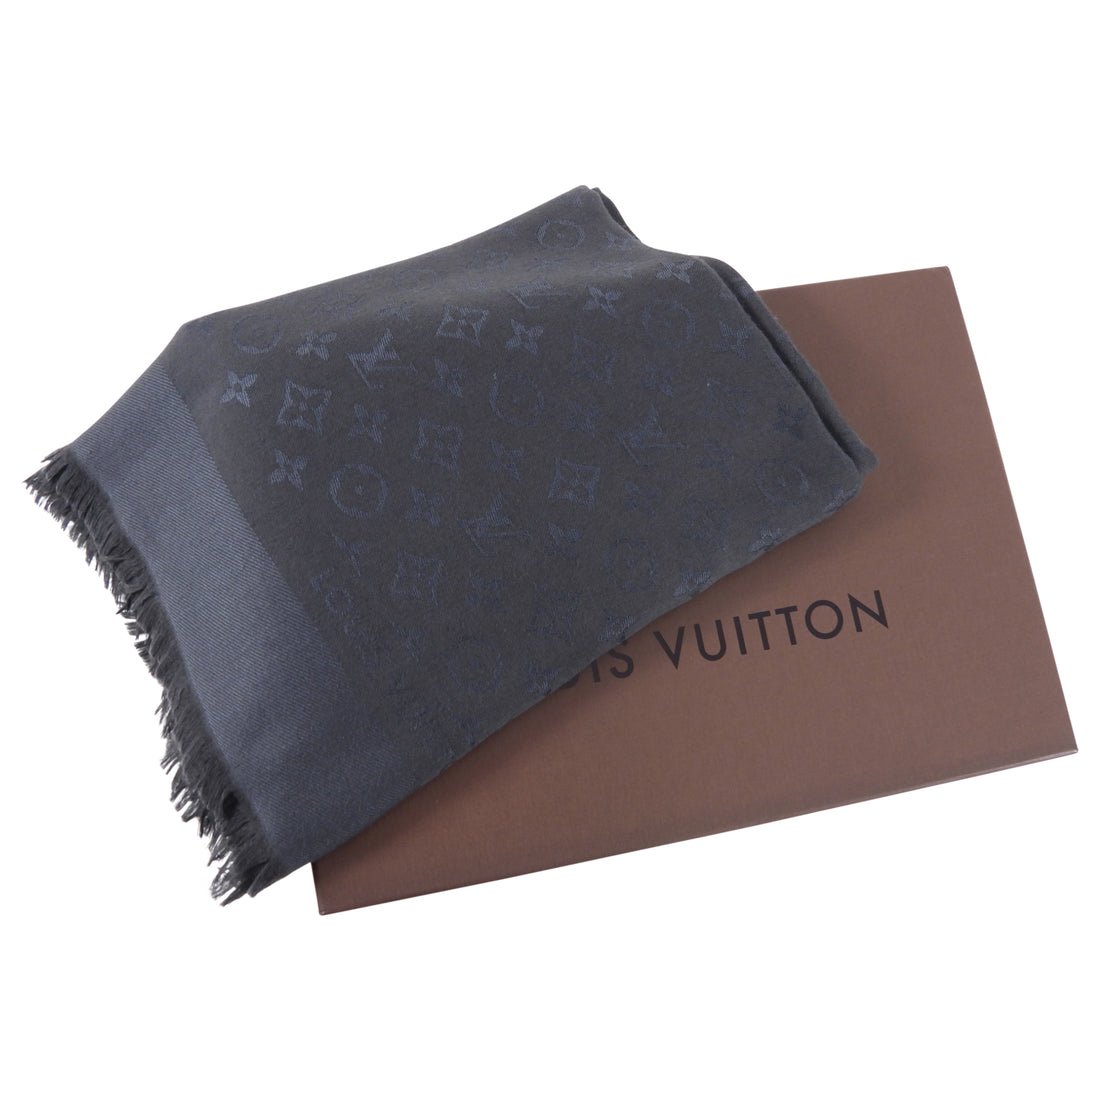 Louis Vuitton Monogram Scarf Silk/Wool Black/Grey